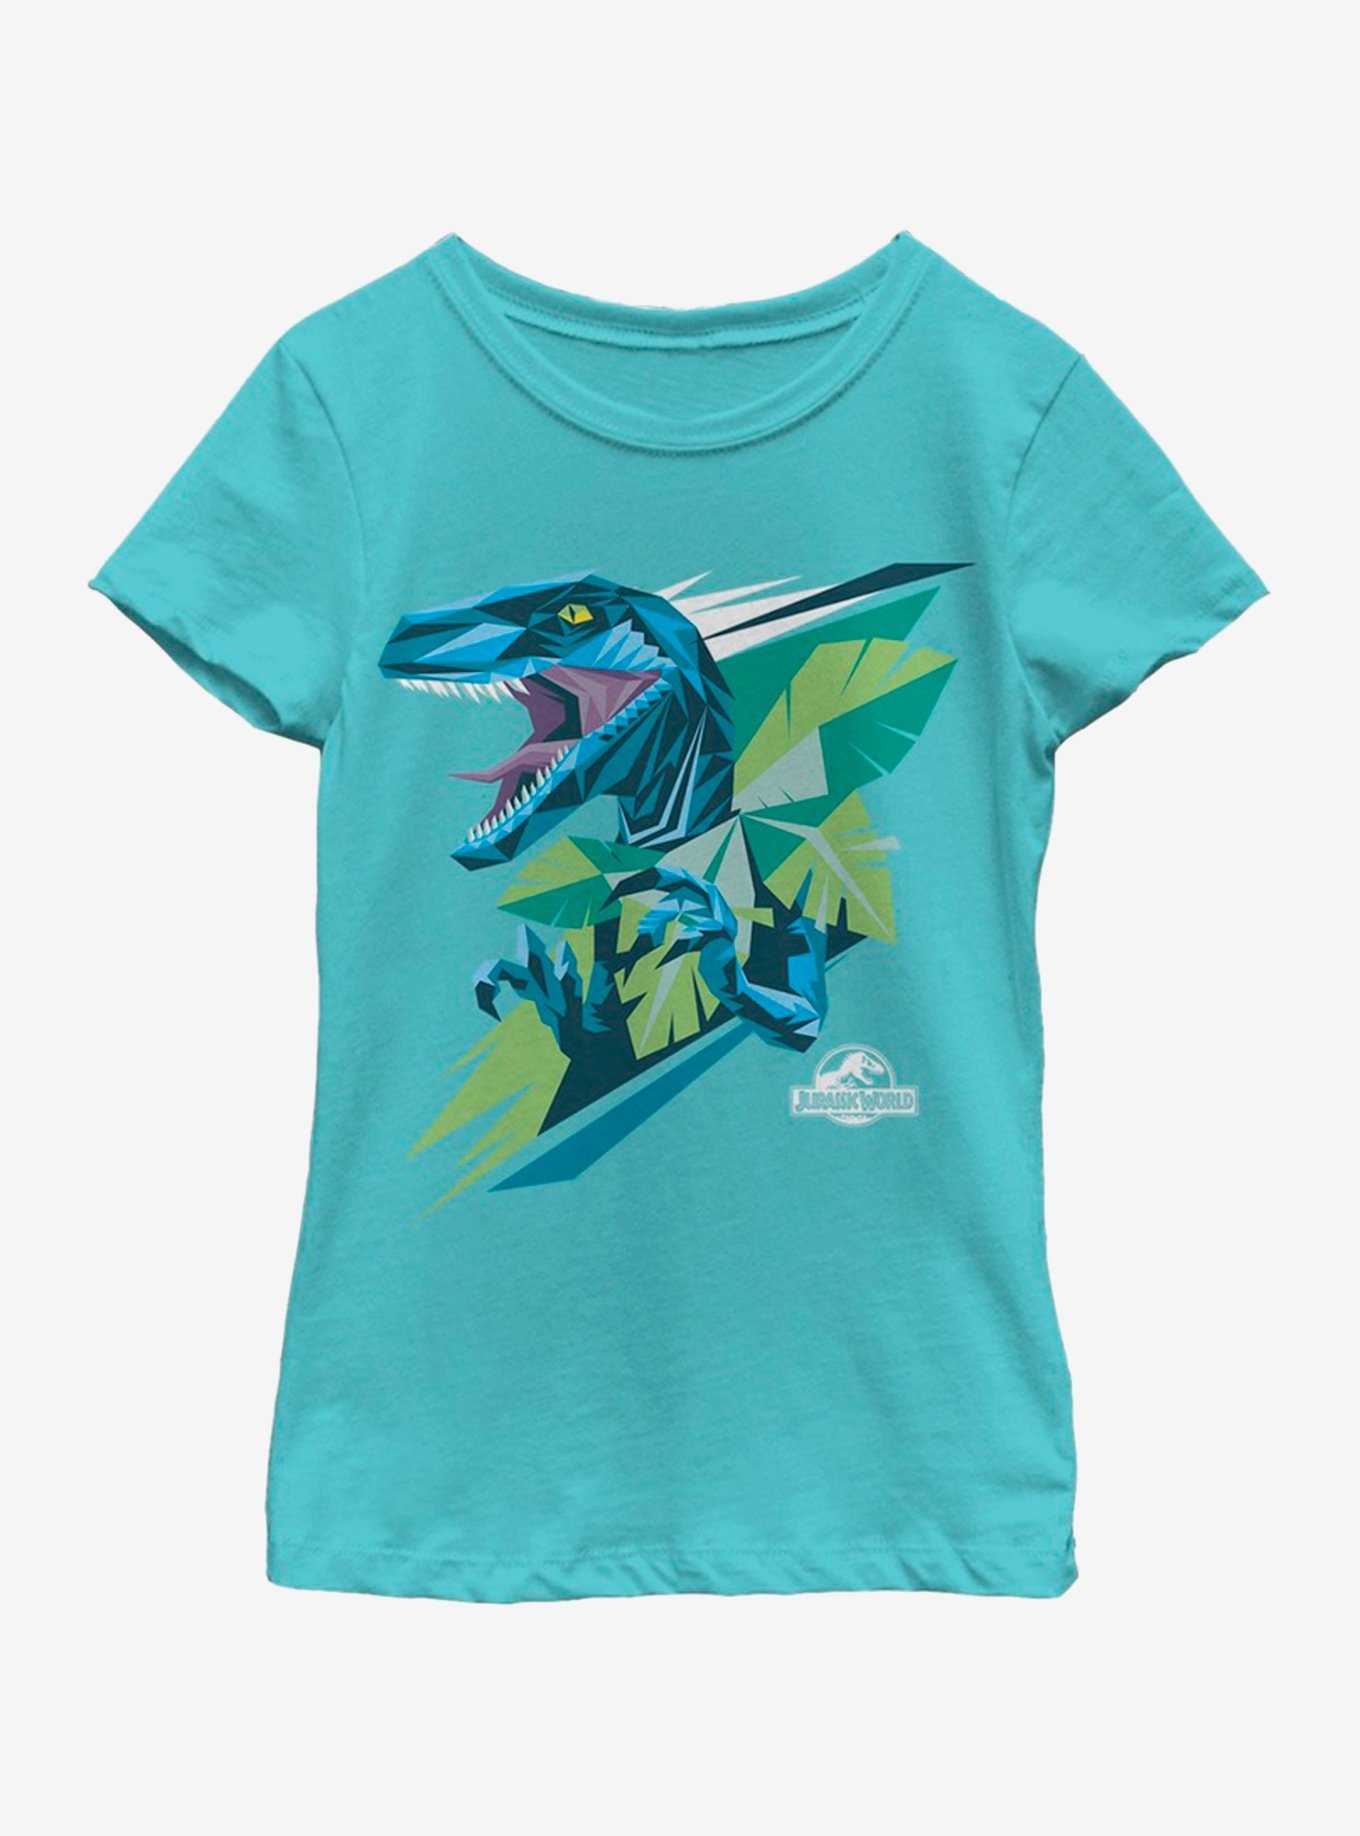 Jurassic Park Blue Dino Youth Girls T-Shirt, , hi-res